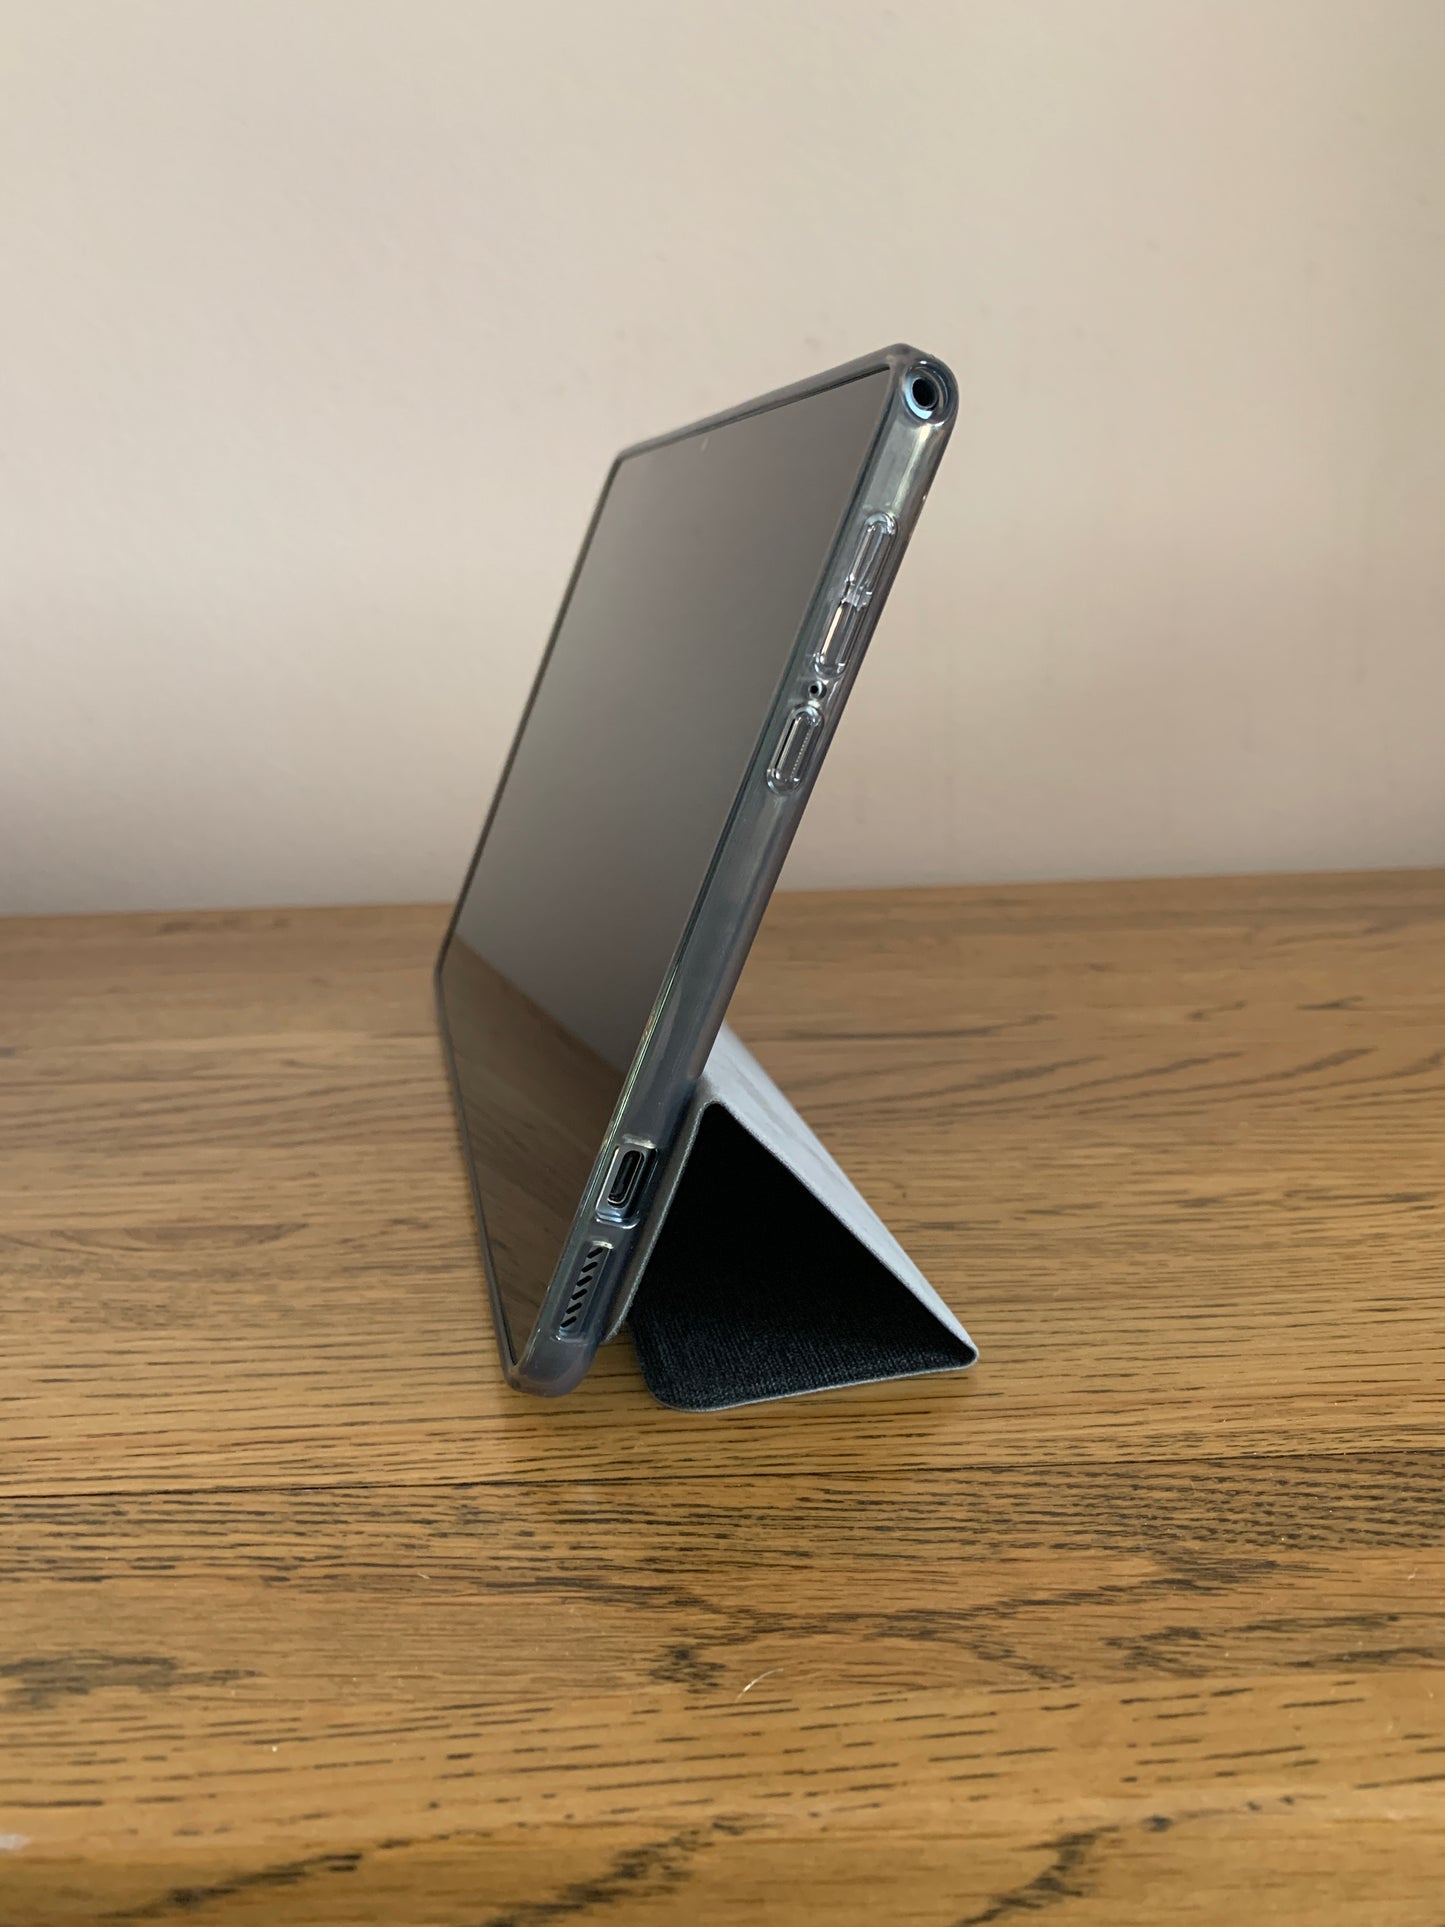 Joysurf tablet case with stand